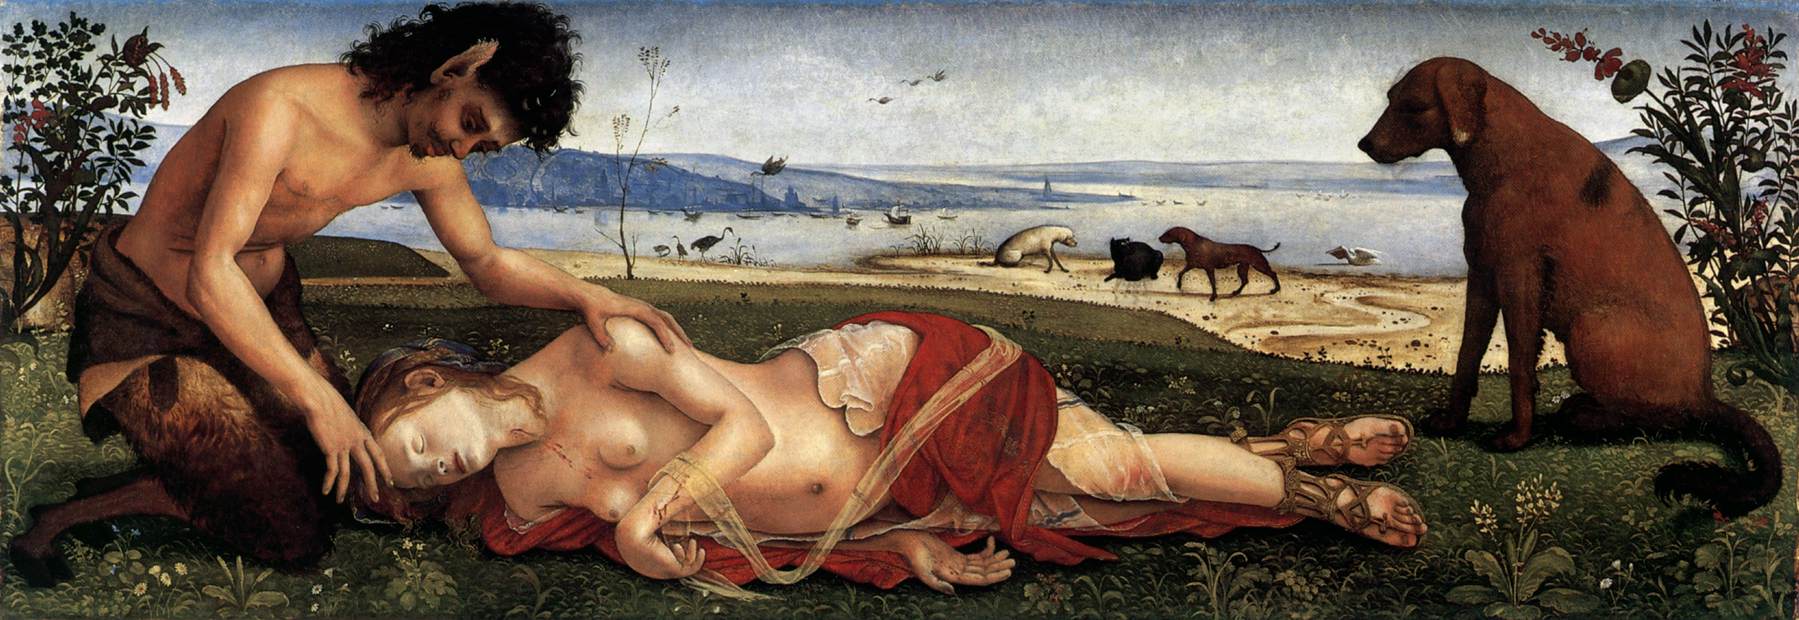 Piero di Cosimo, The Death of Procris  c. 1500 Oil on panel, 65 x 183 cm